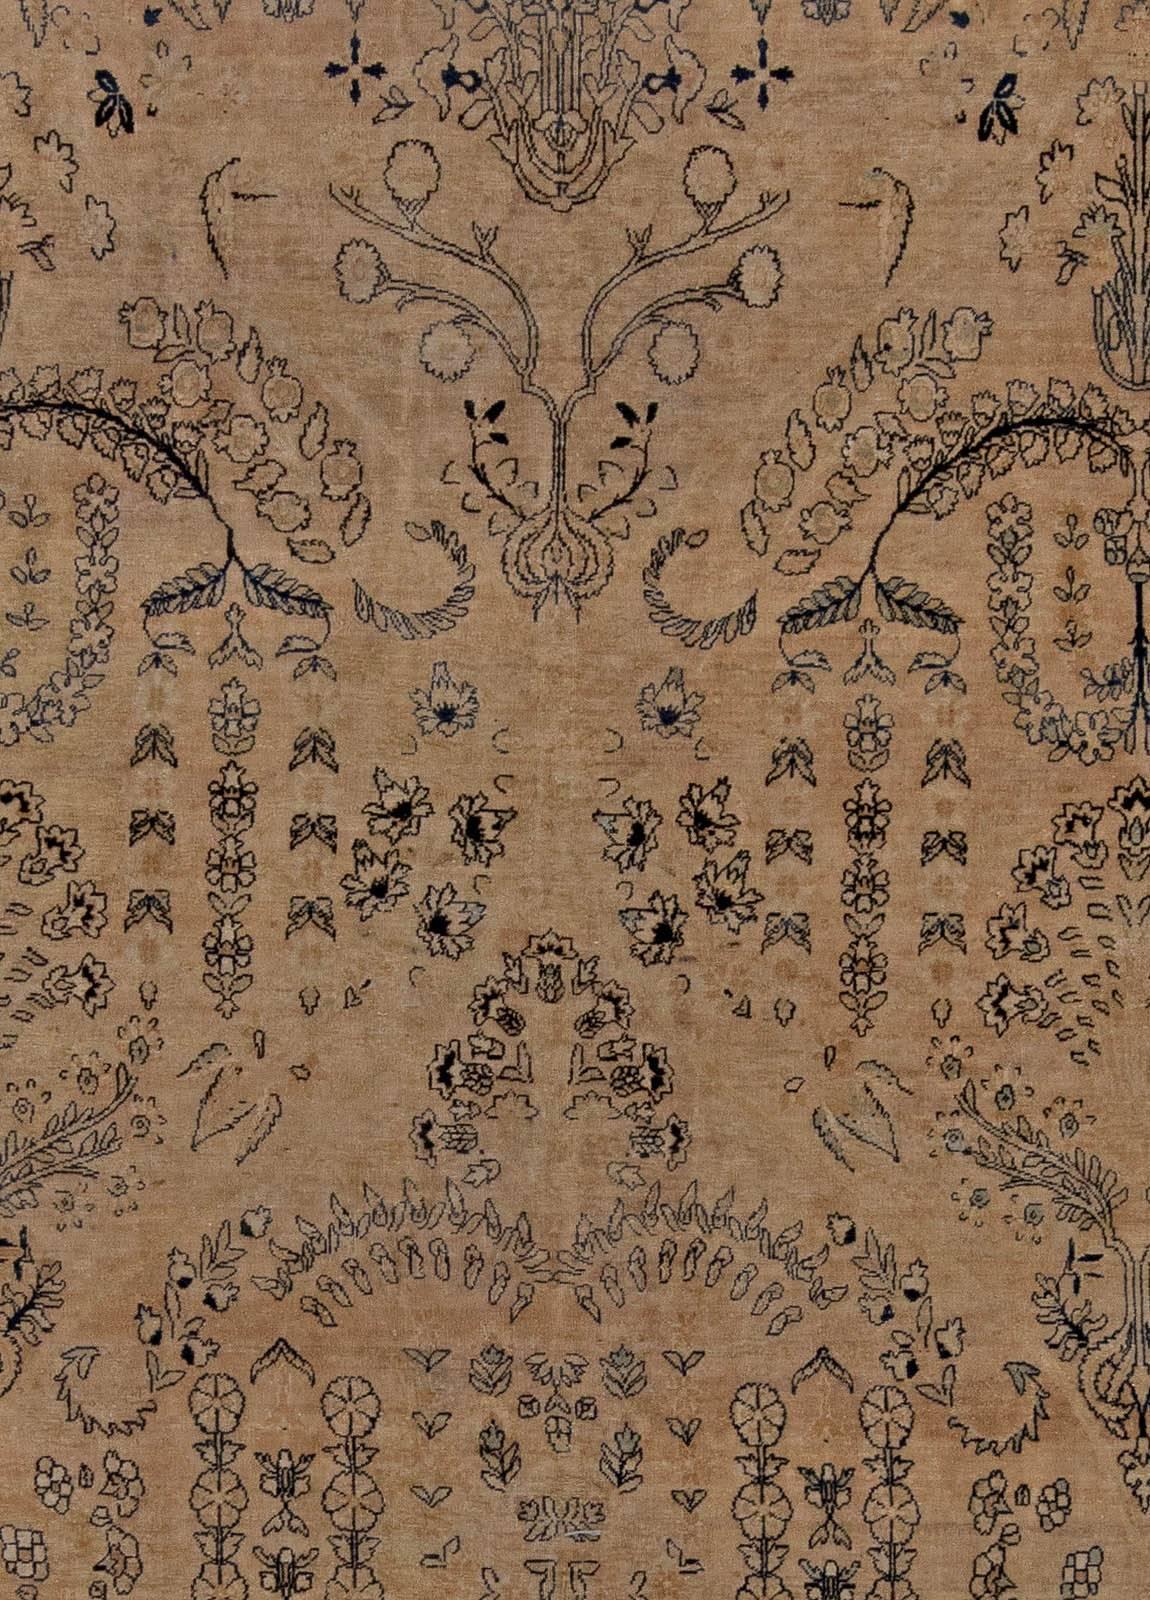 Antique Persian Kirman handwoven wool rug
Size: 11'8